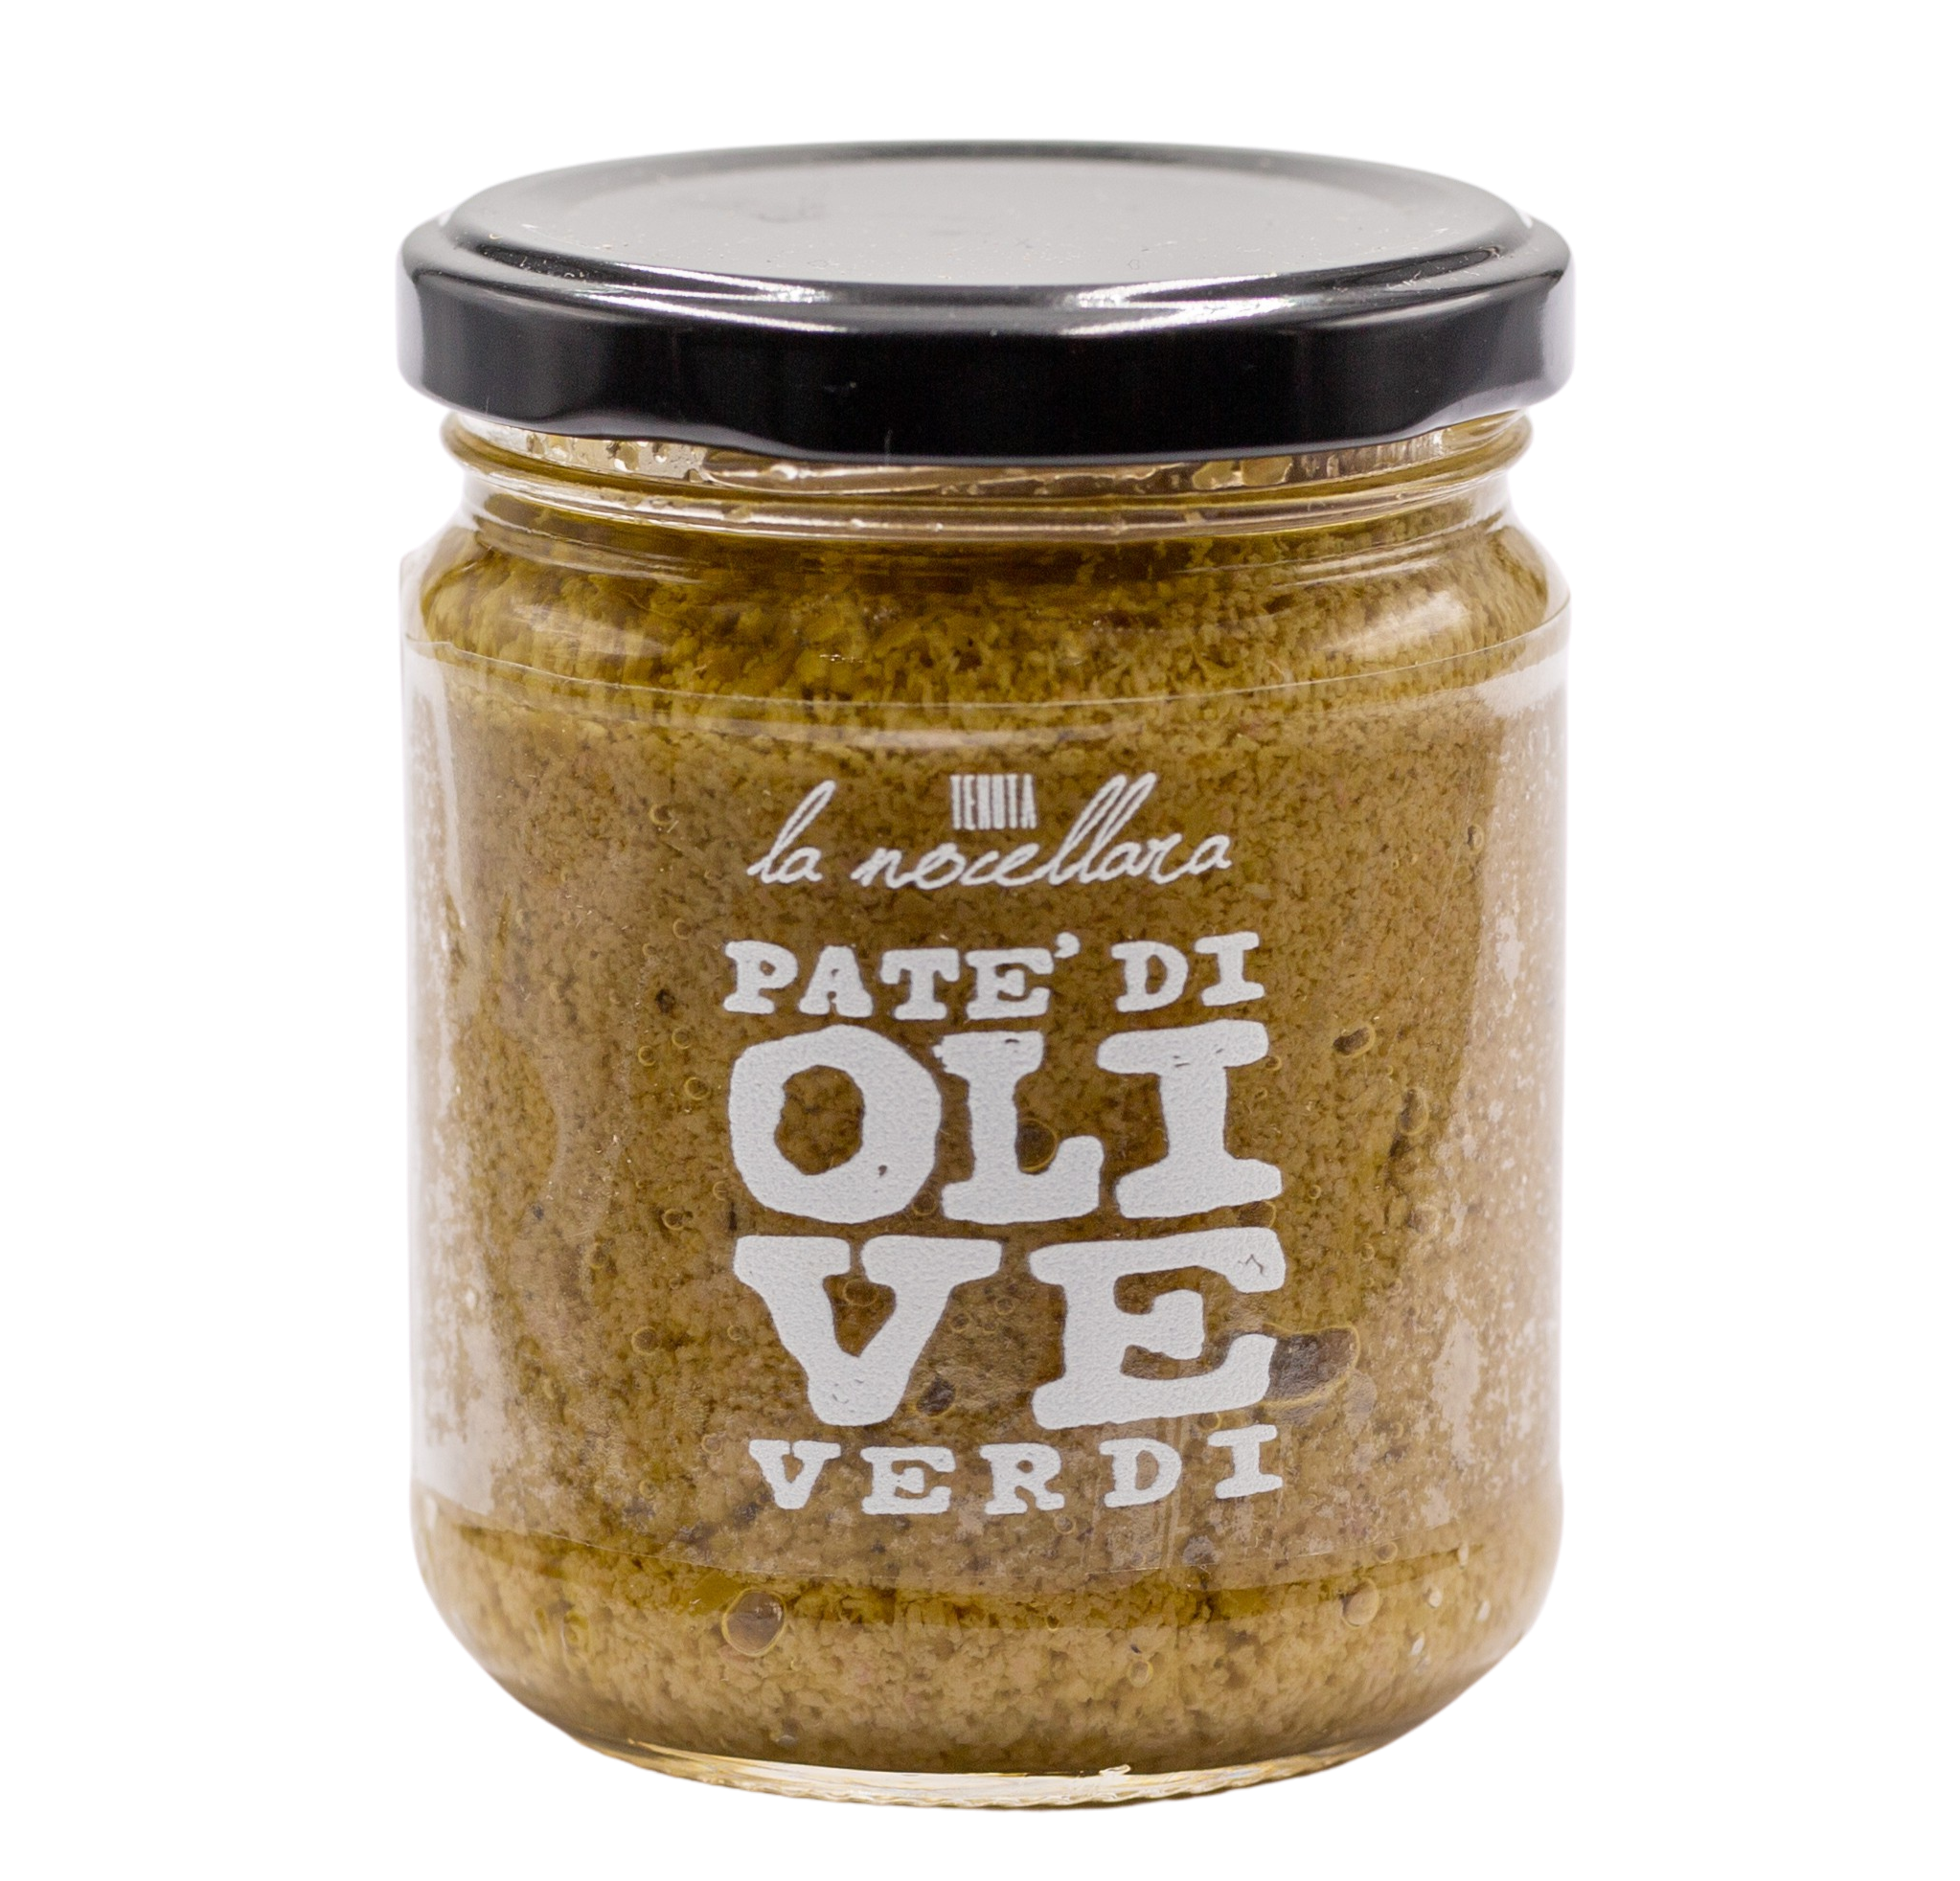 Paté di olive verdi - 190 gr.